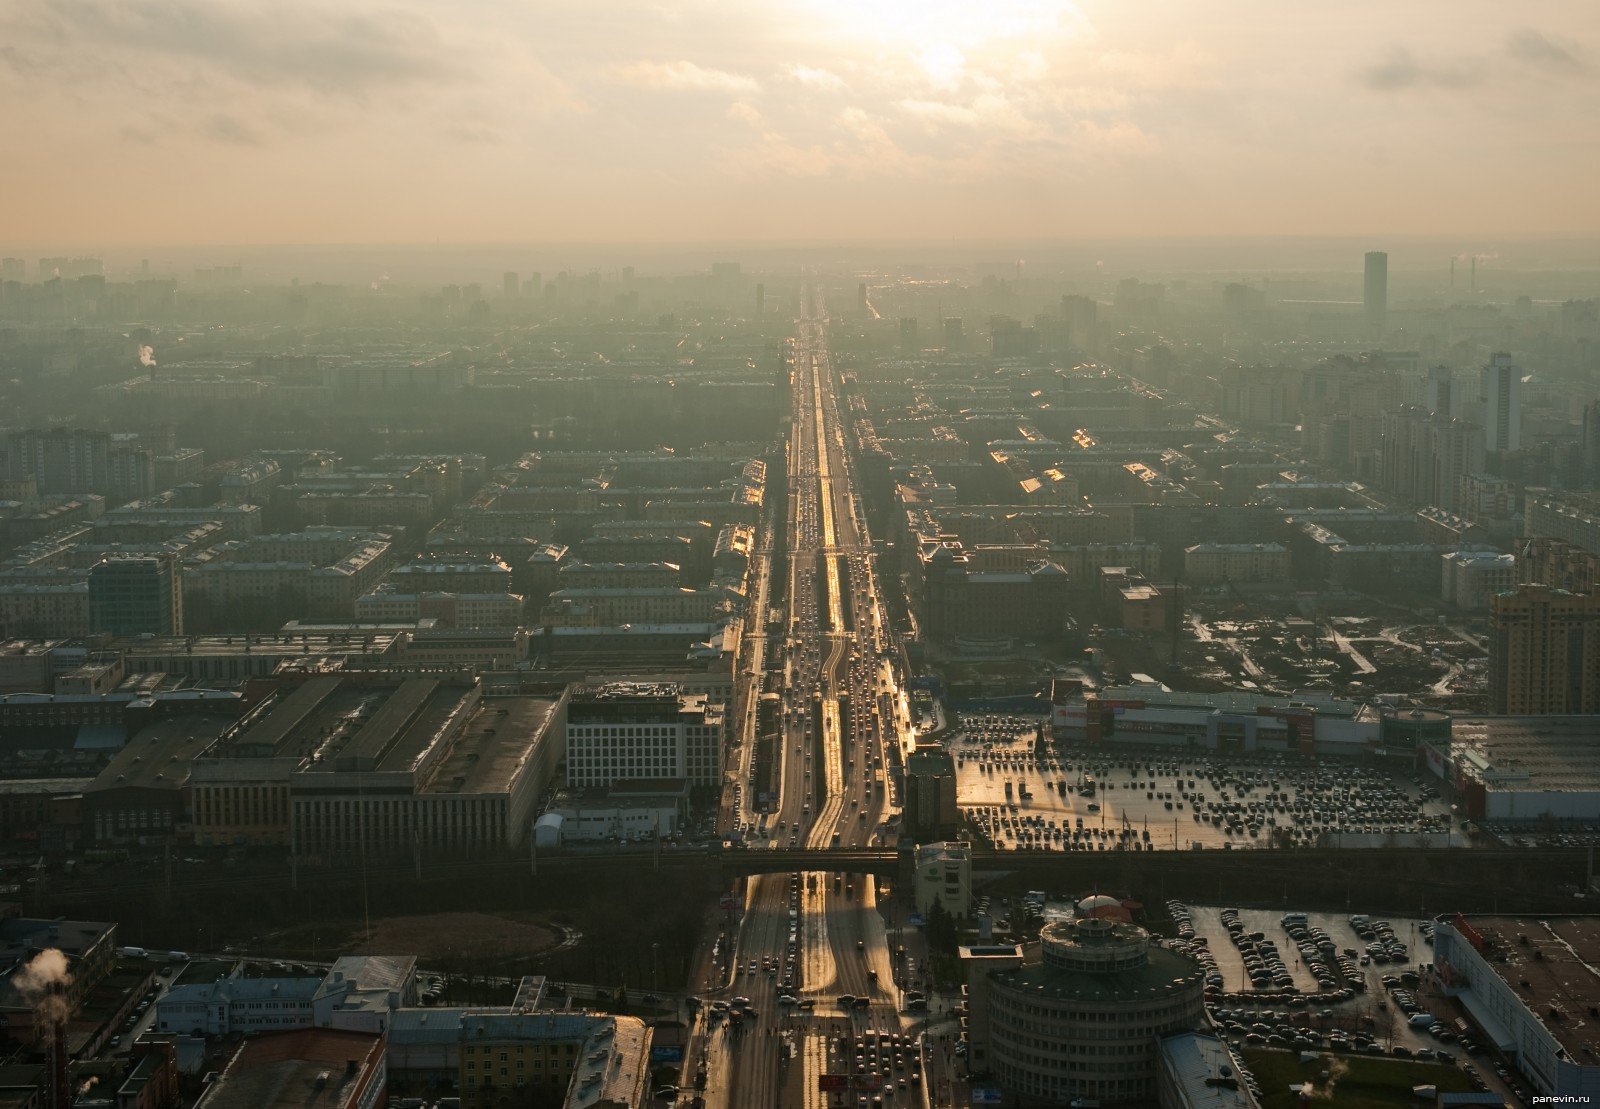 Московский проспект спб фото